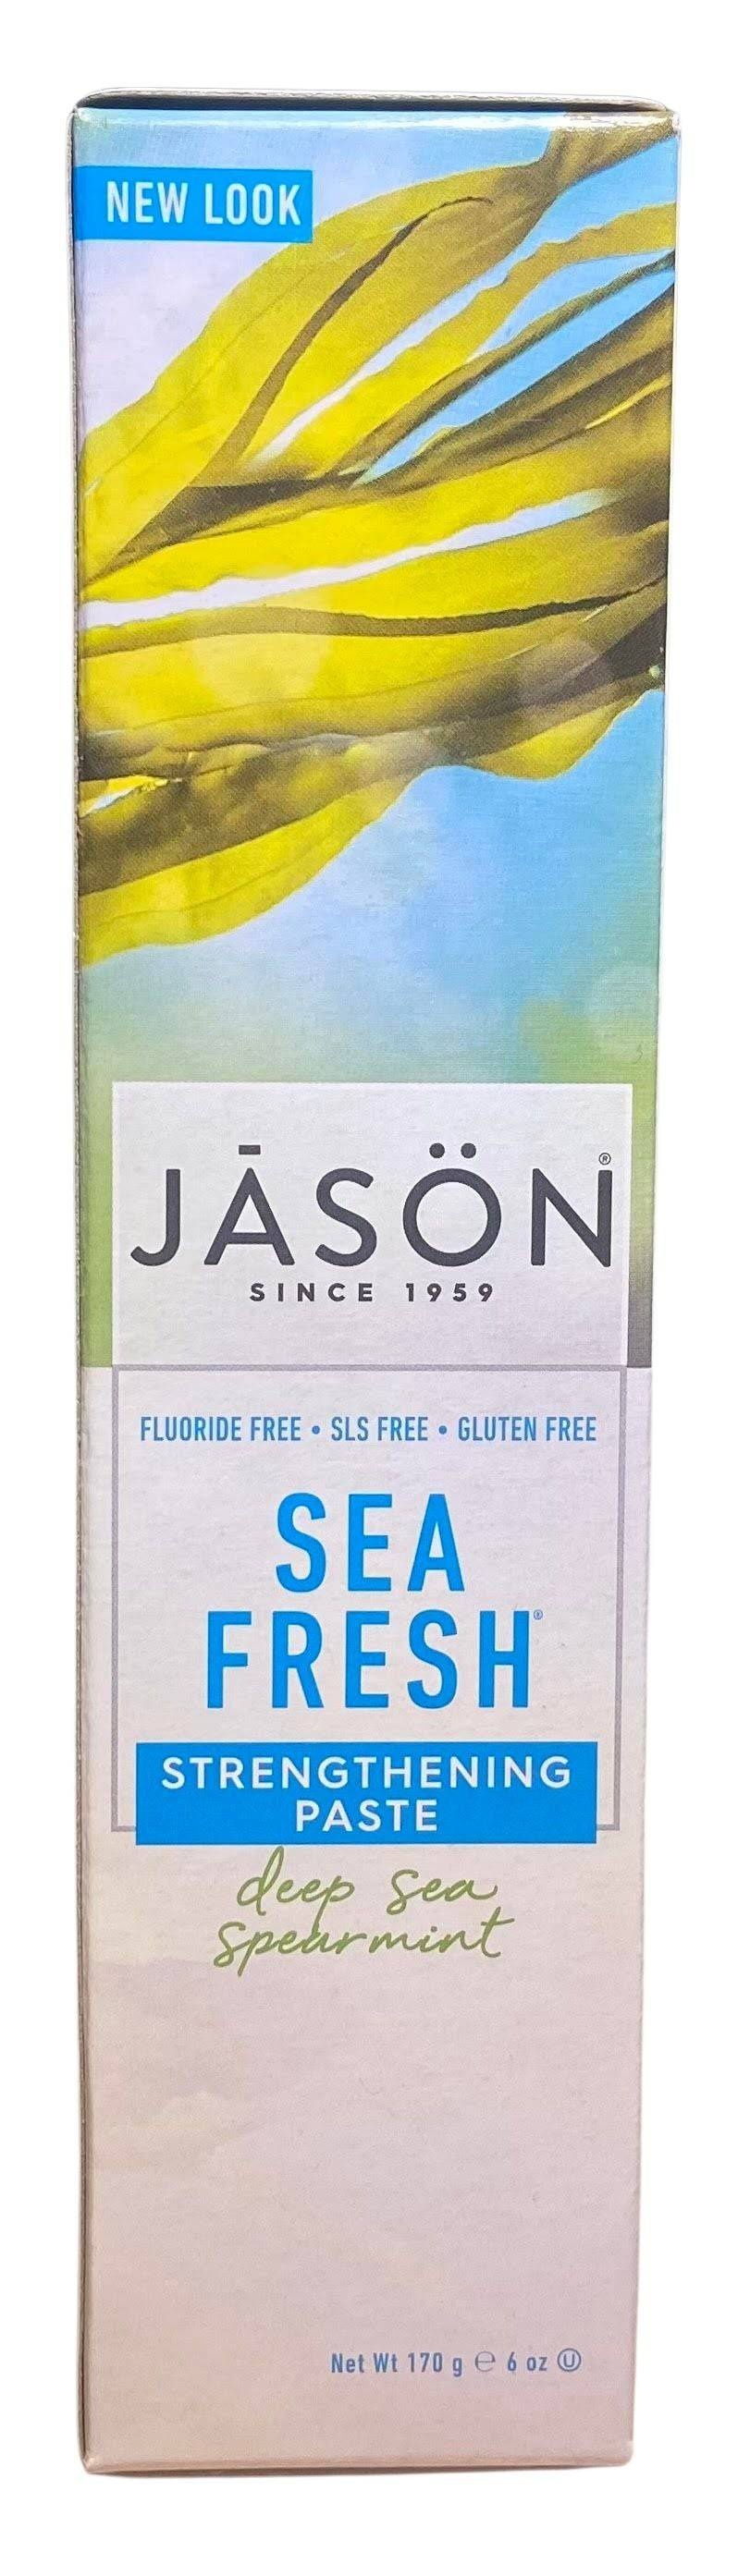 Jason Fluoride Free Toothpaste